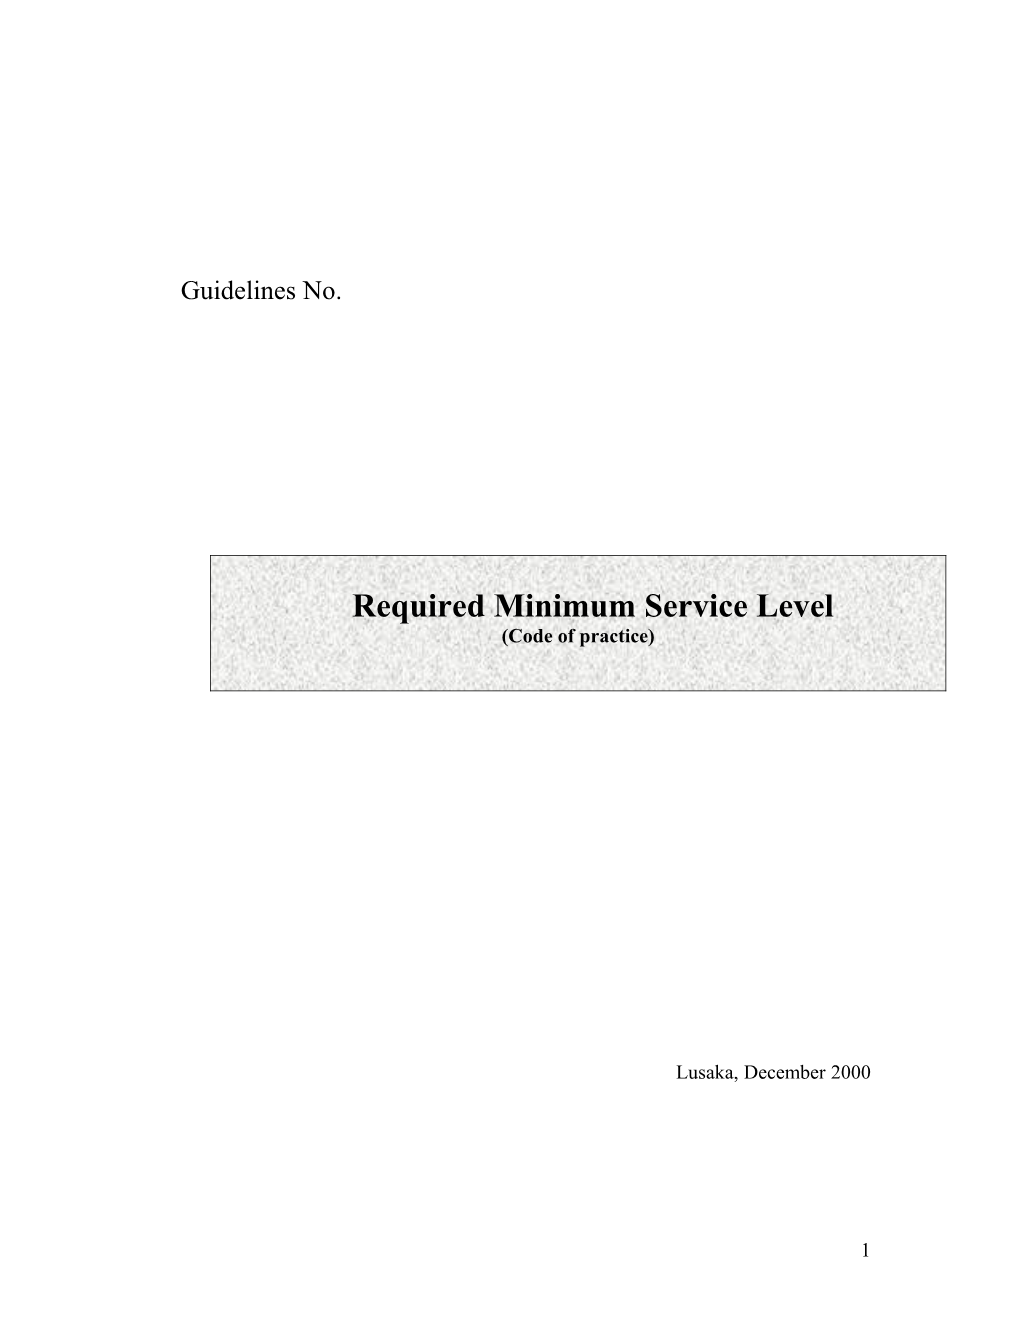 3)Indicators for the Minimum Service Level